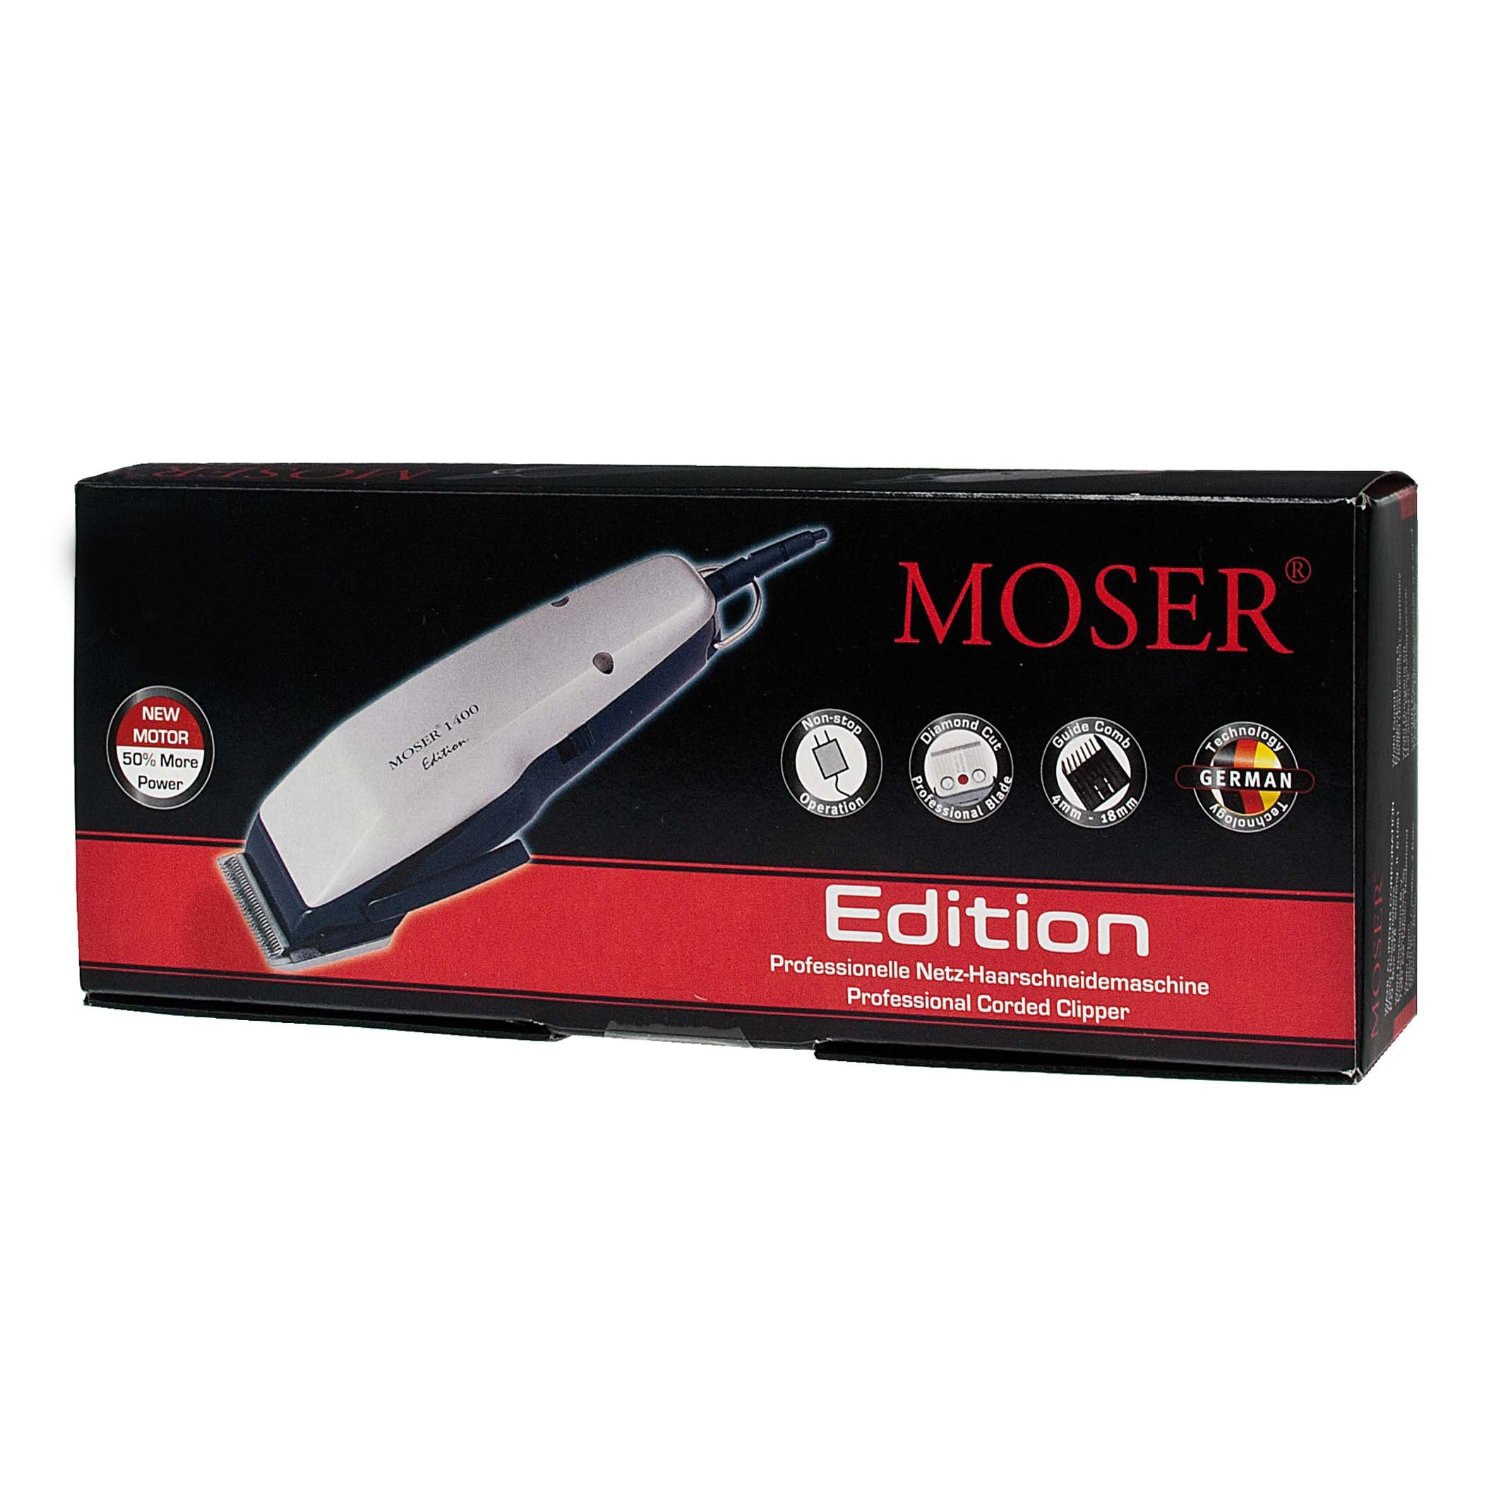 Moser 1400 edition. Moser 1400-0458 Edition. Moser машинка 1406. Машинки Moser 1400-0458. Moser chrom2style blending Edition 1877.